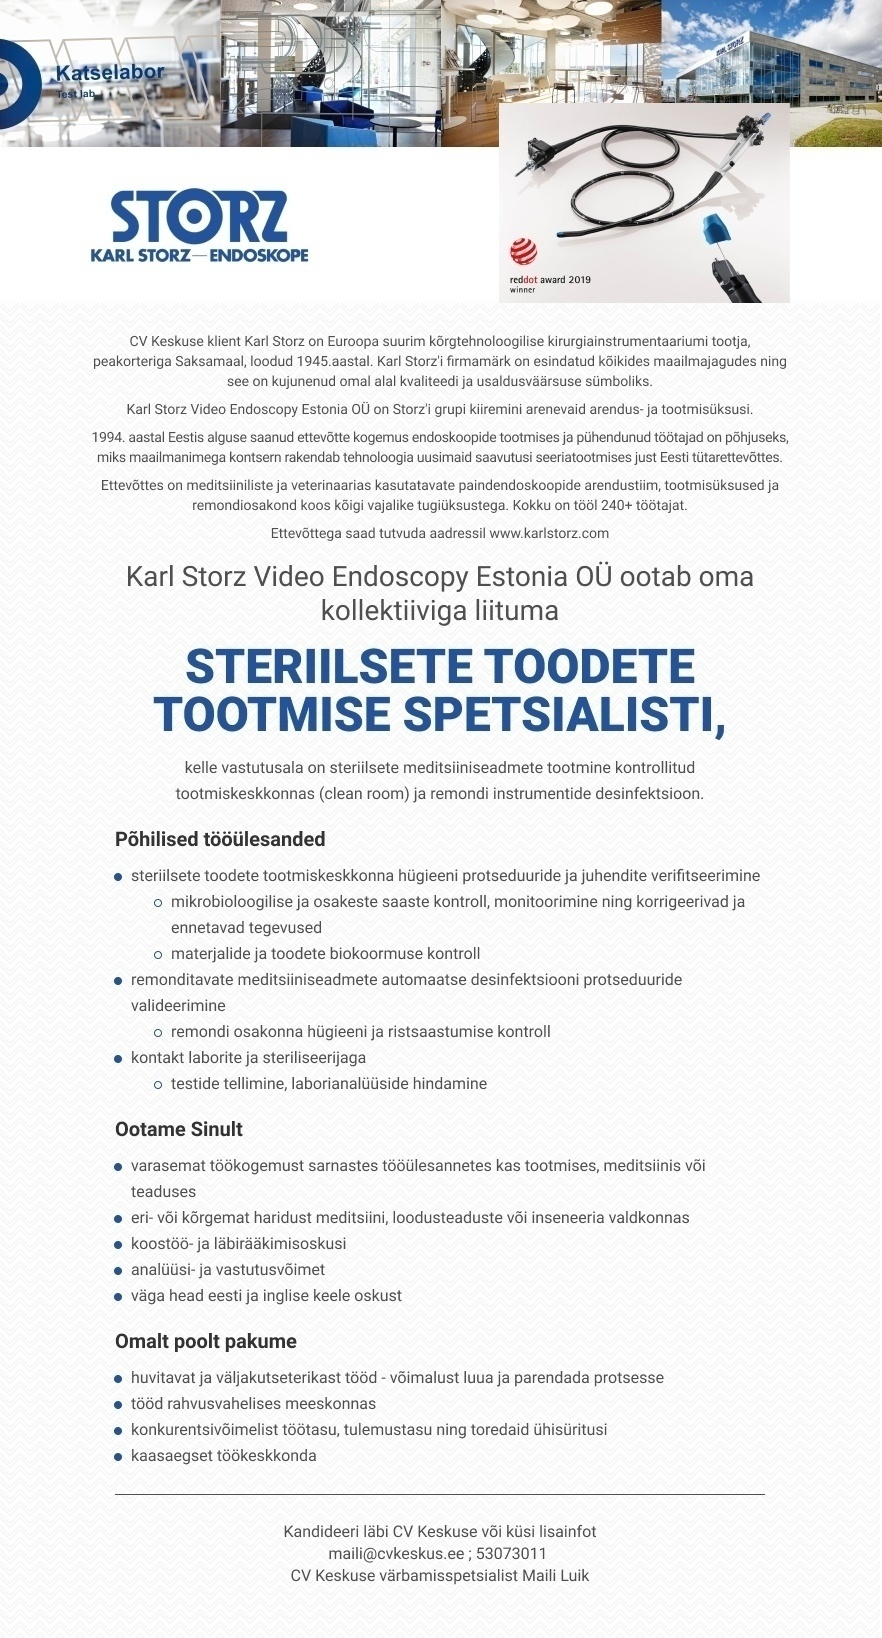 Karl Storz Video Endoscopy Estonia OÜ  Steriilsete toodete tootmise spetsialist